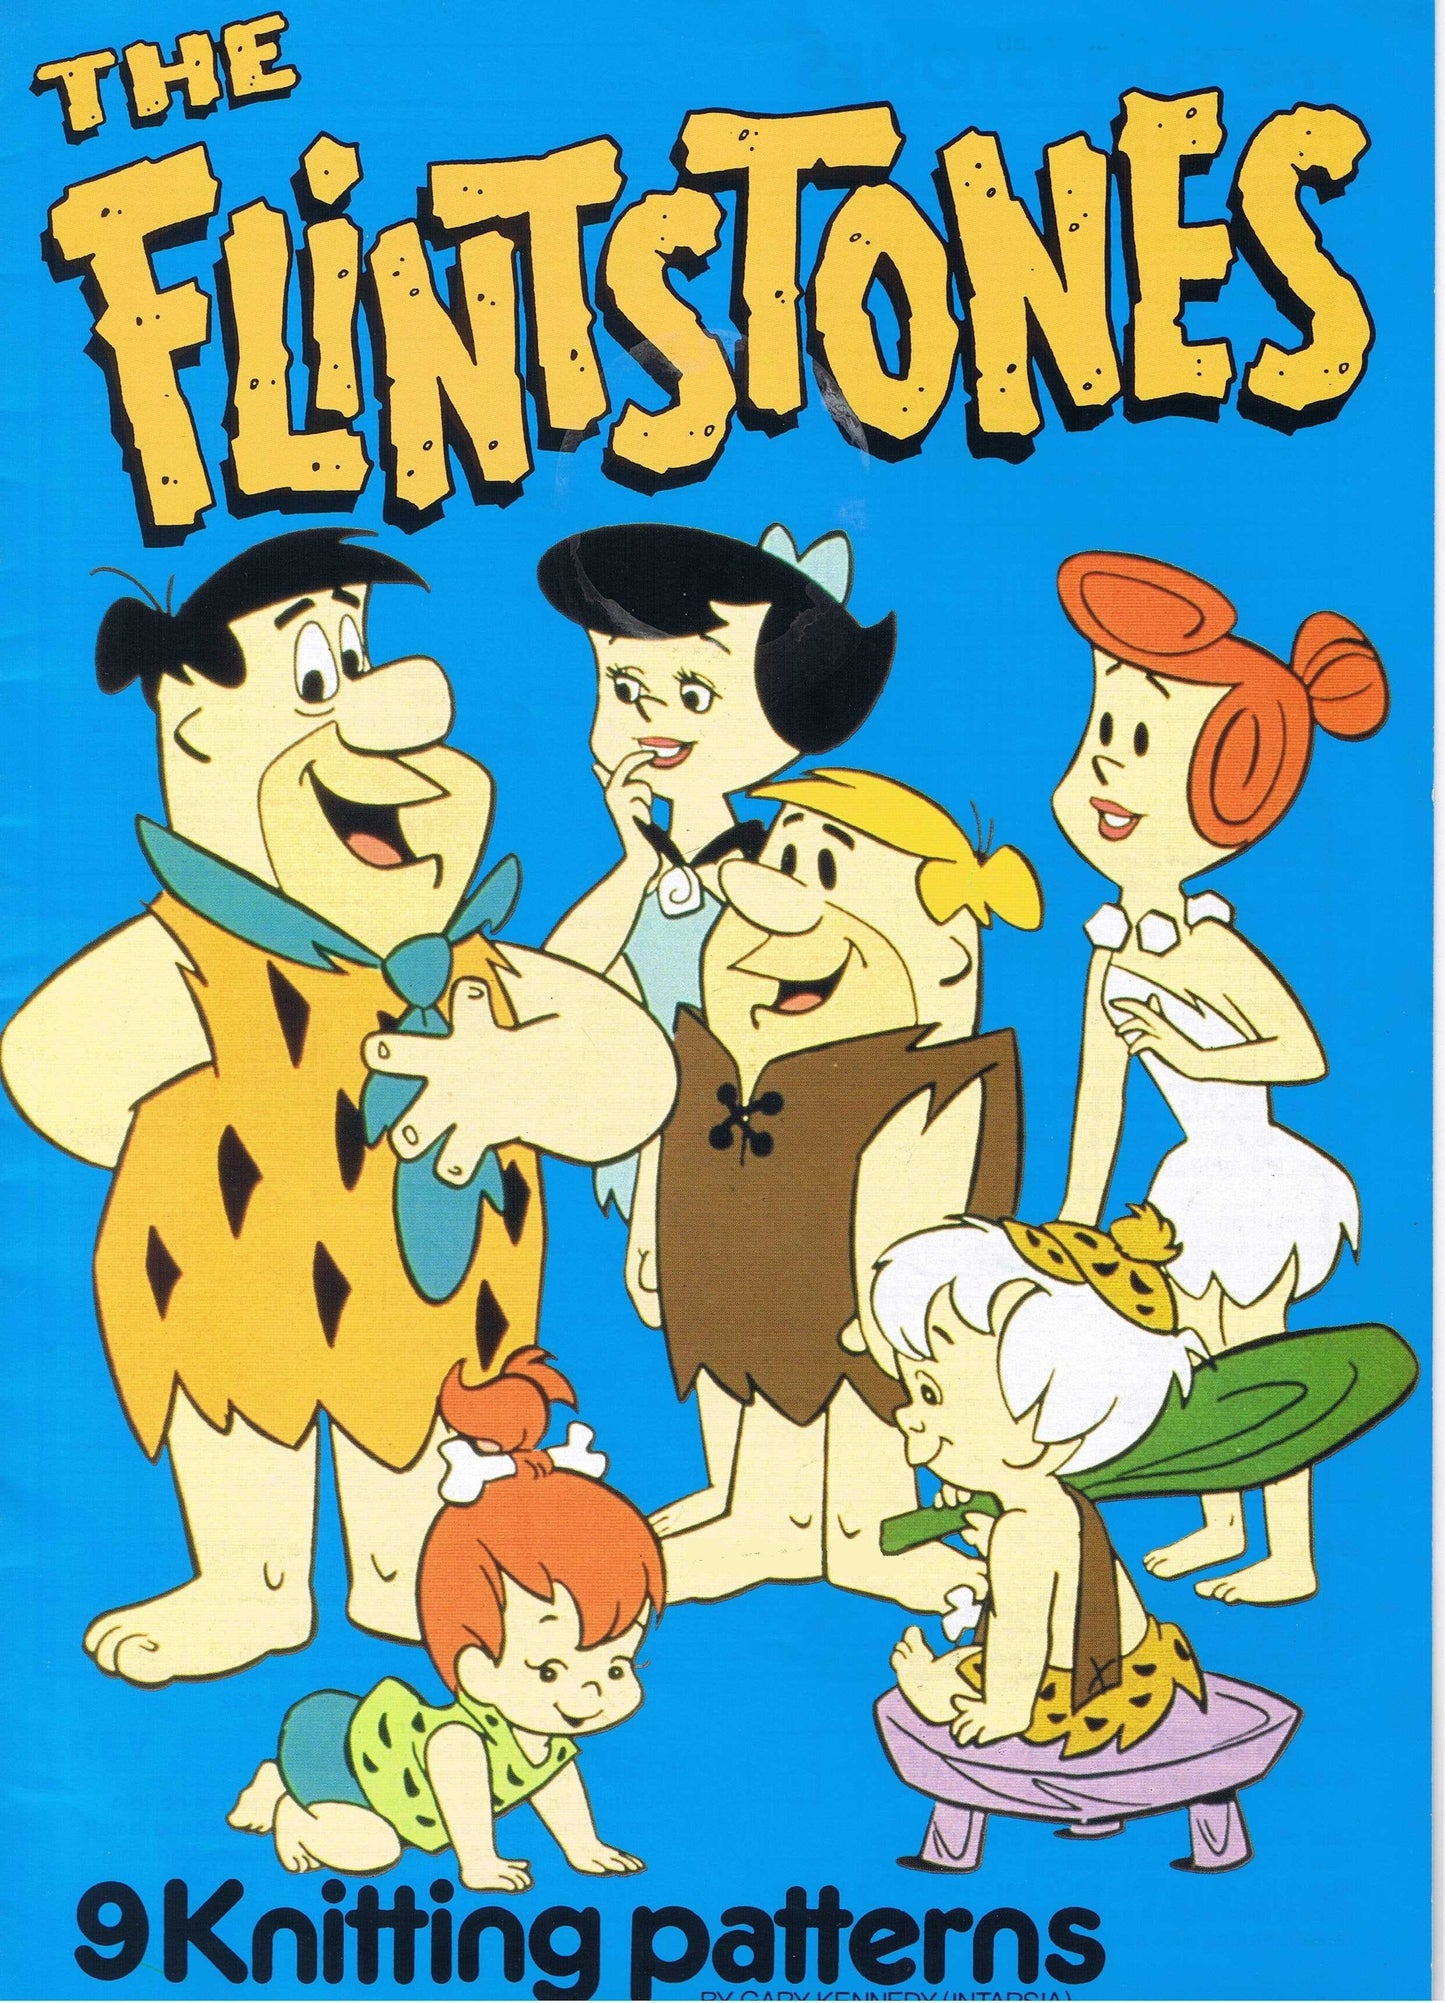  The Flintstones Jumper Vintage Knitting Pattern by Cross Stitch Chart Heaven sold by Free Spirit Accessories